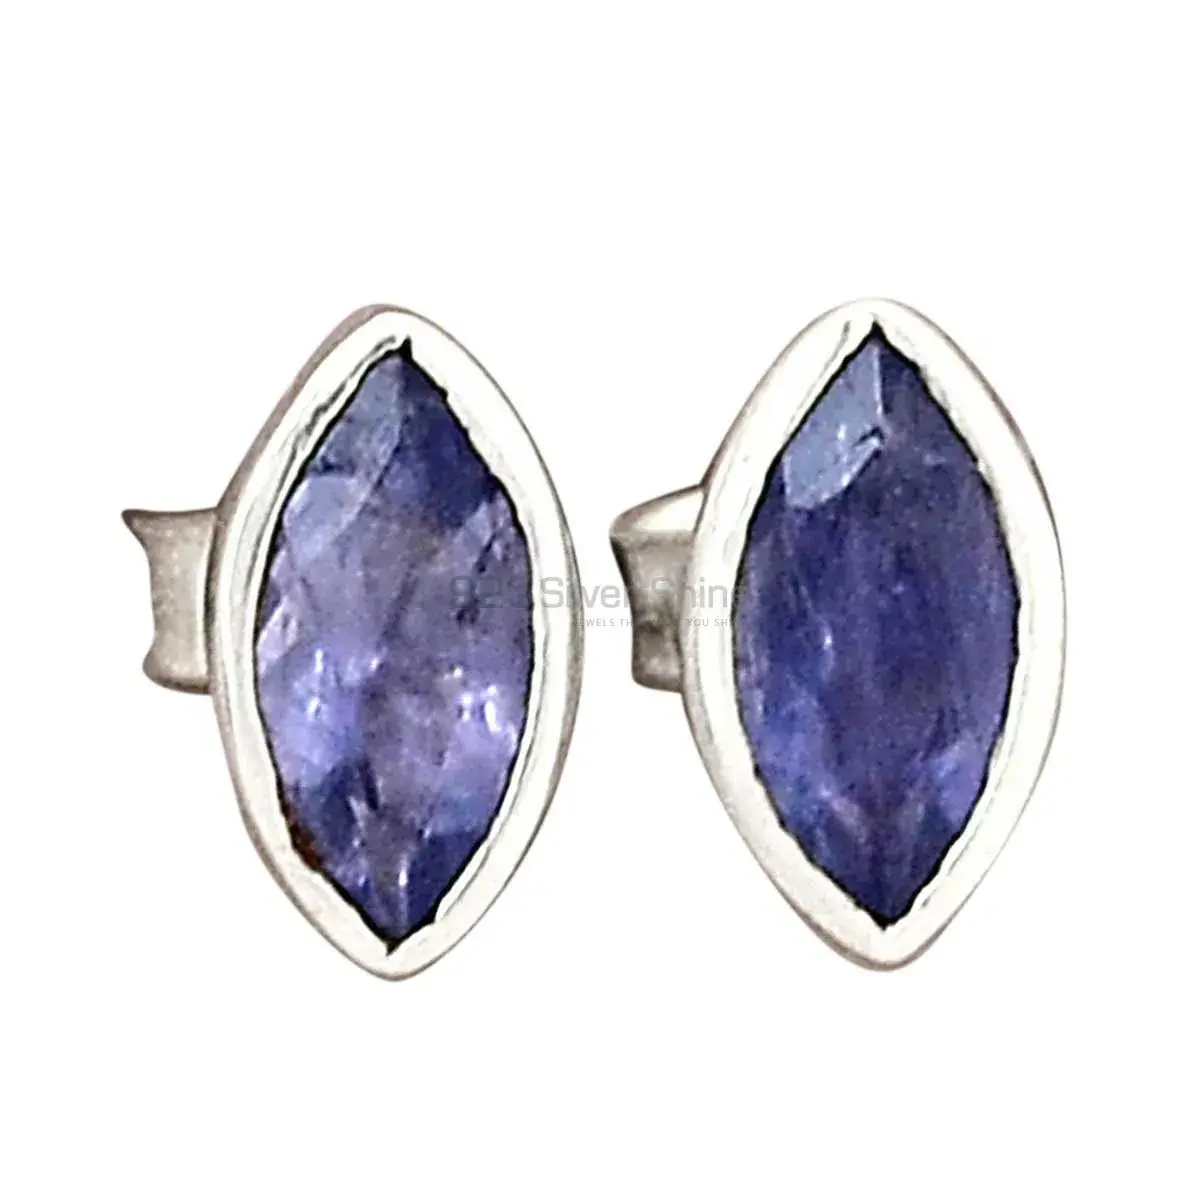 Best Quality 925 Sterling Silver Earrings In Iolite Gemstone Jewelry 925SE2217_2